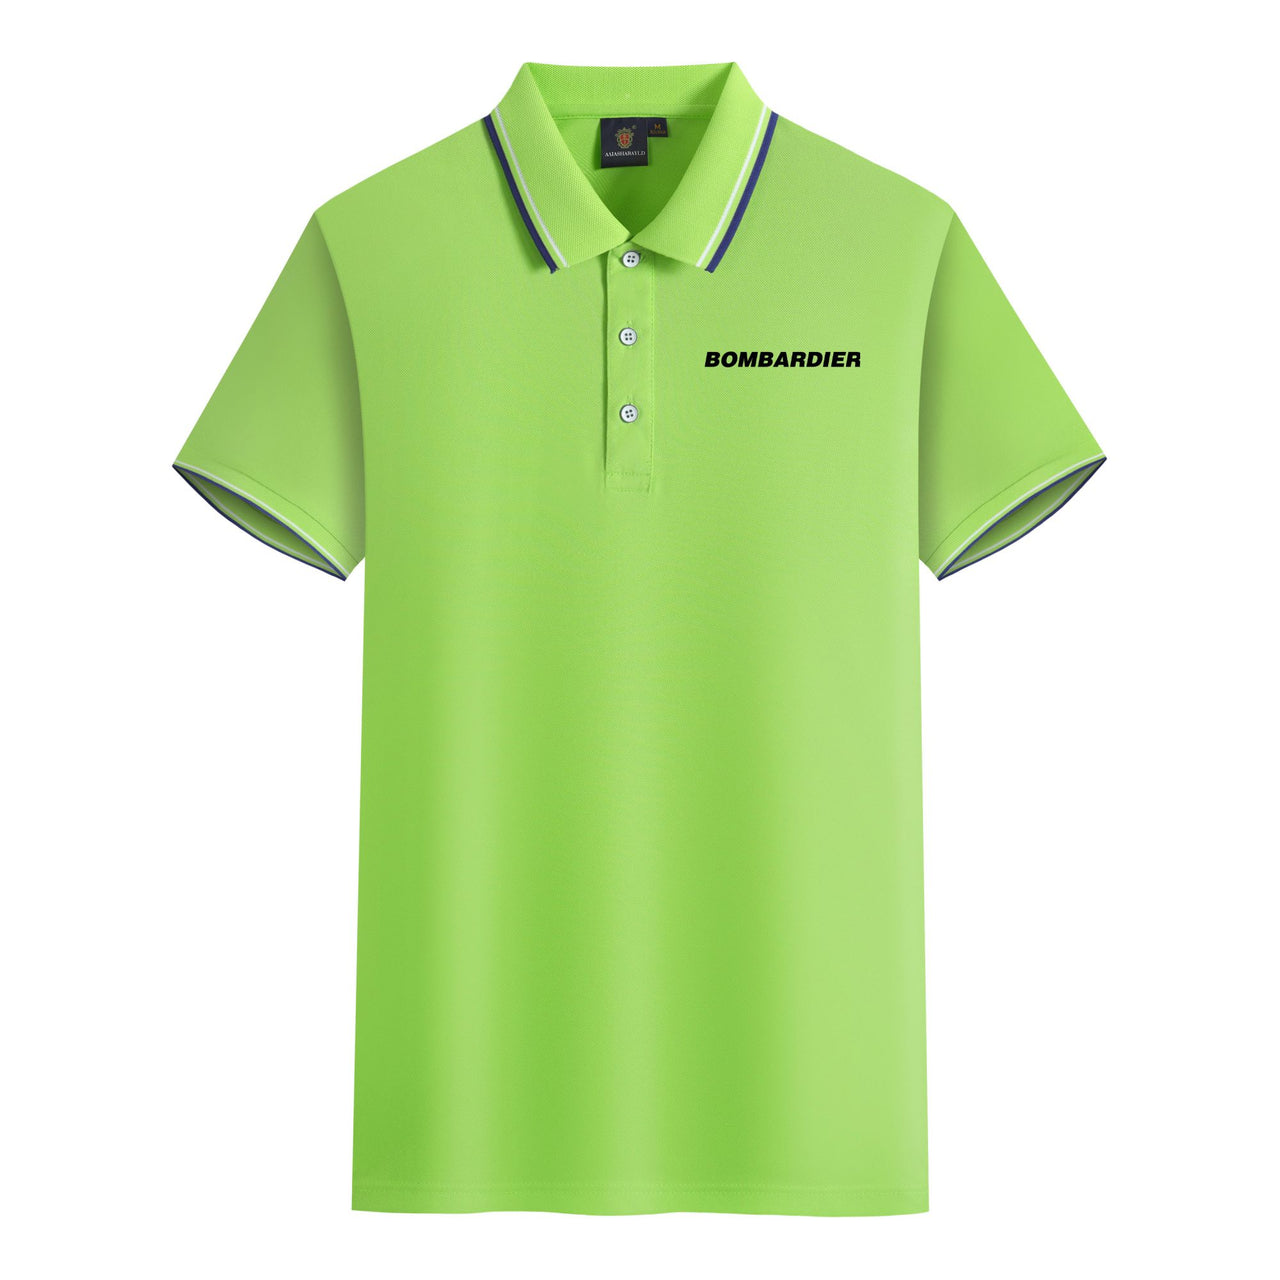 Bombardier & Text Designed Stylish Polo T-Shirts